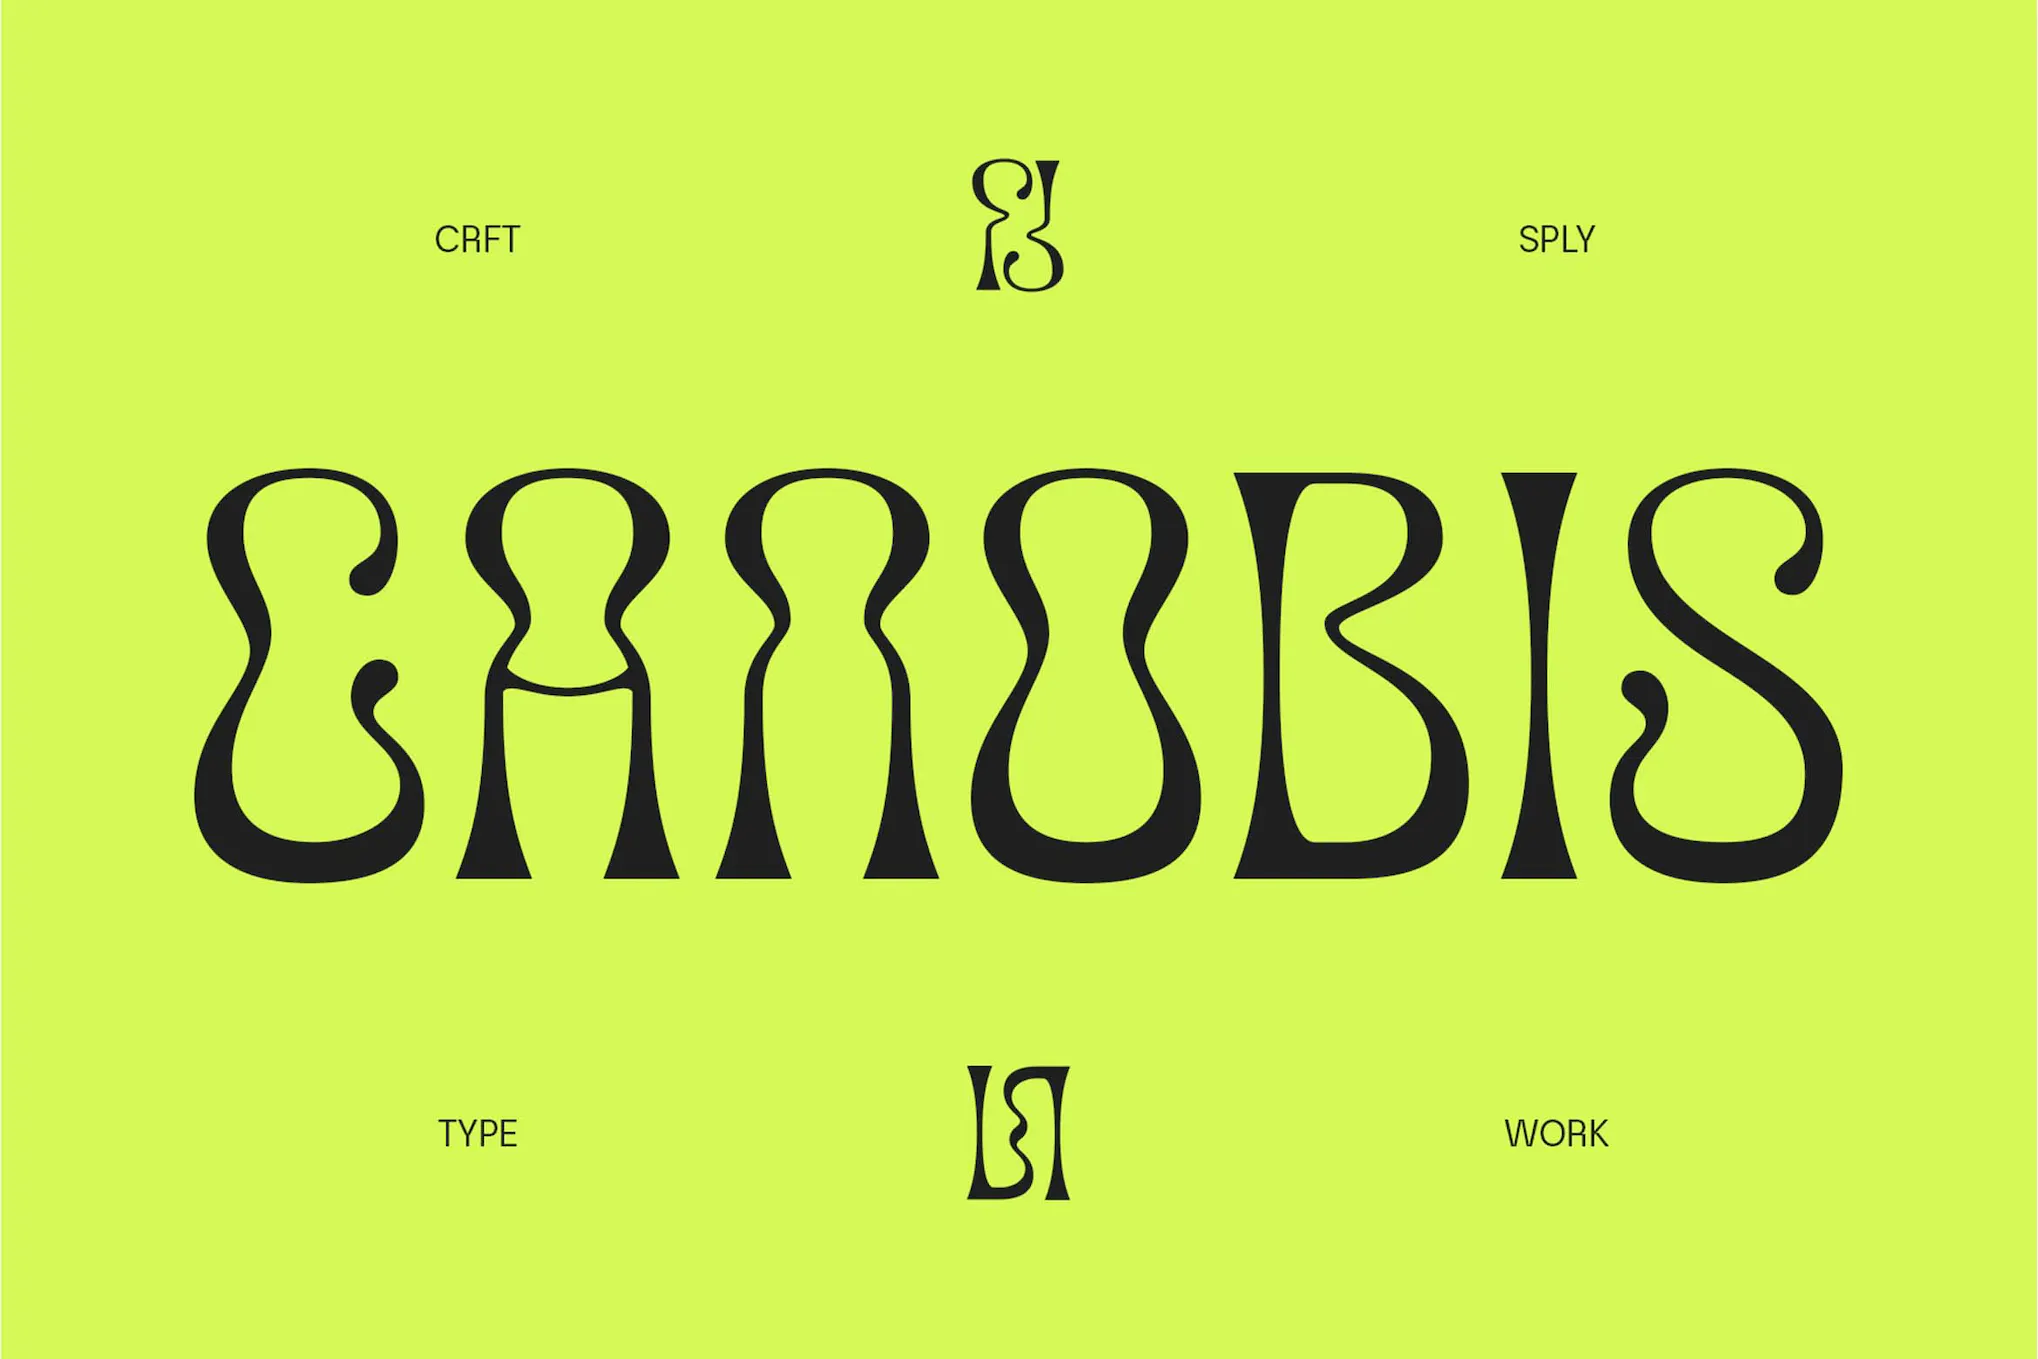 Canobis - Psychedelic Typeface